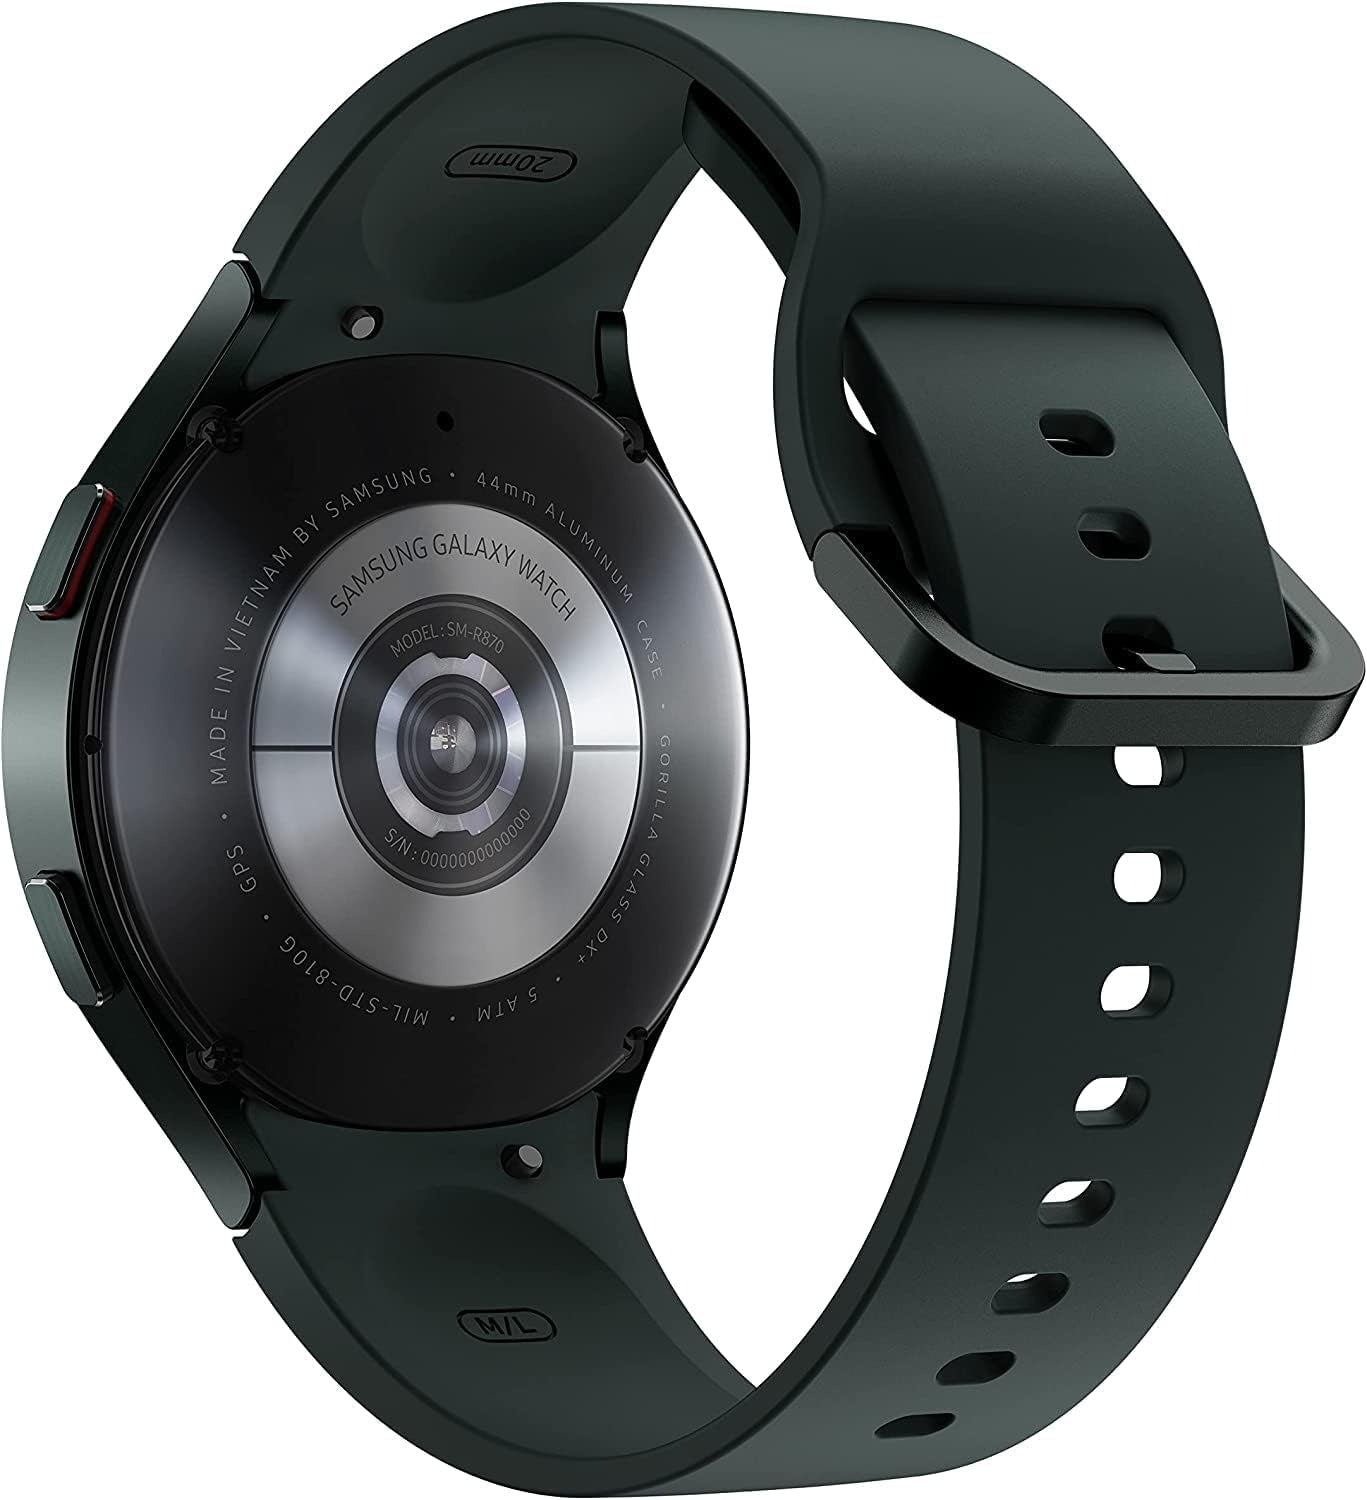 Samsung Galaxy Watch 4 Smartwatch (44mm, WIFI + LTE, Bluetooth) - Green (Pre-Owned)